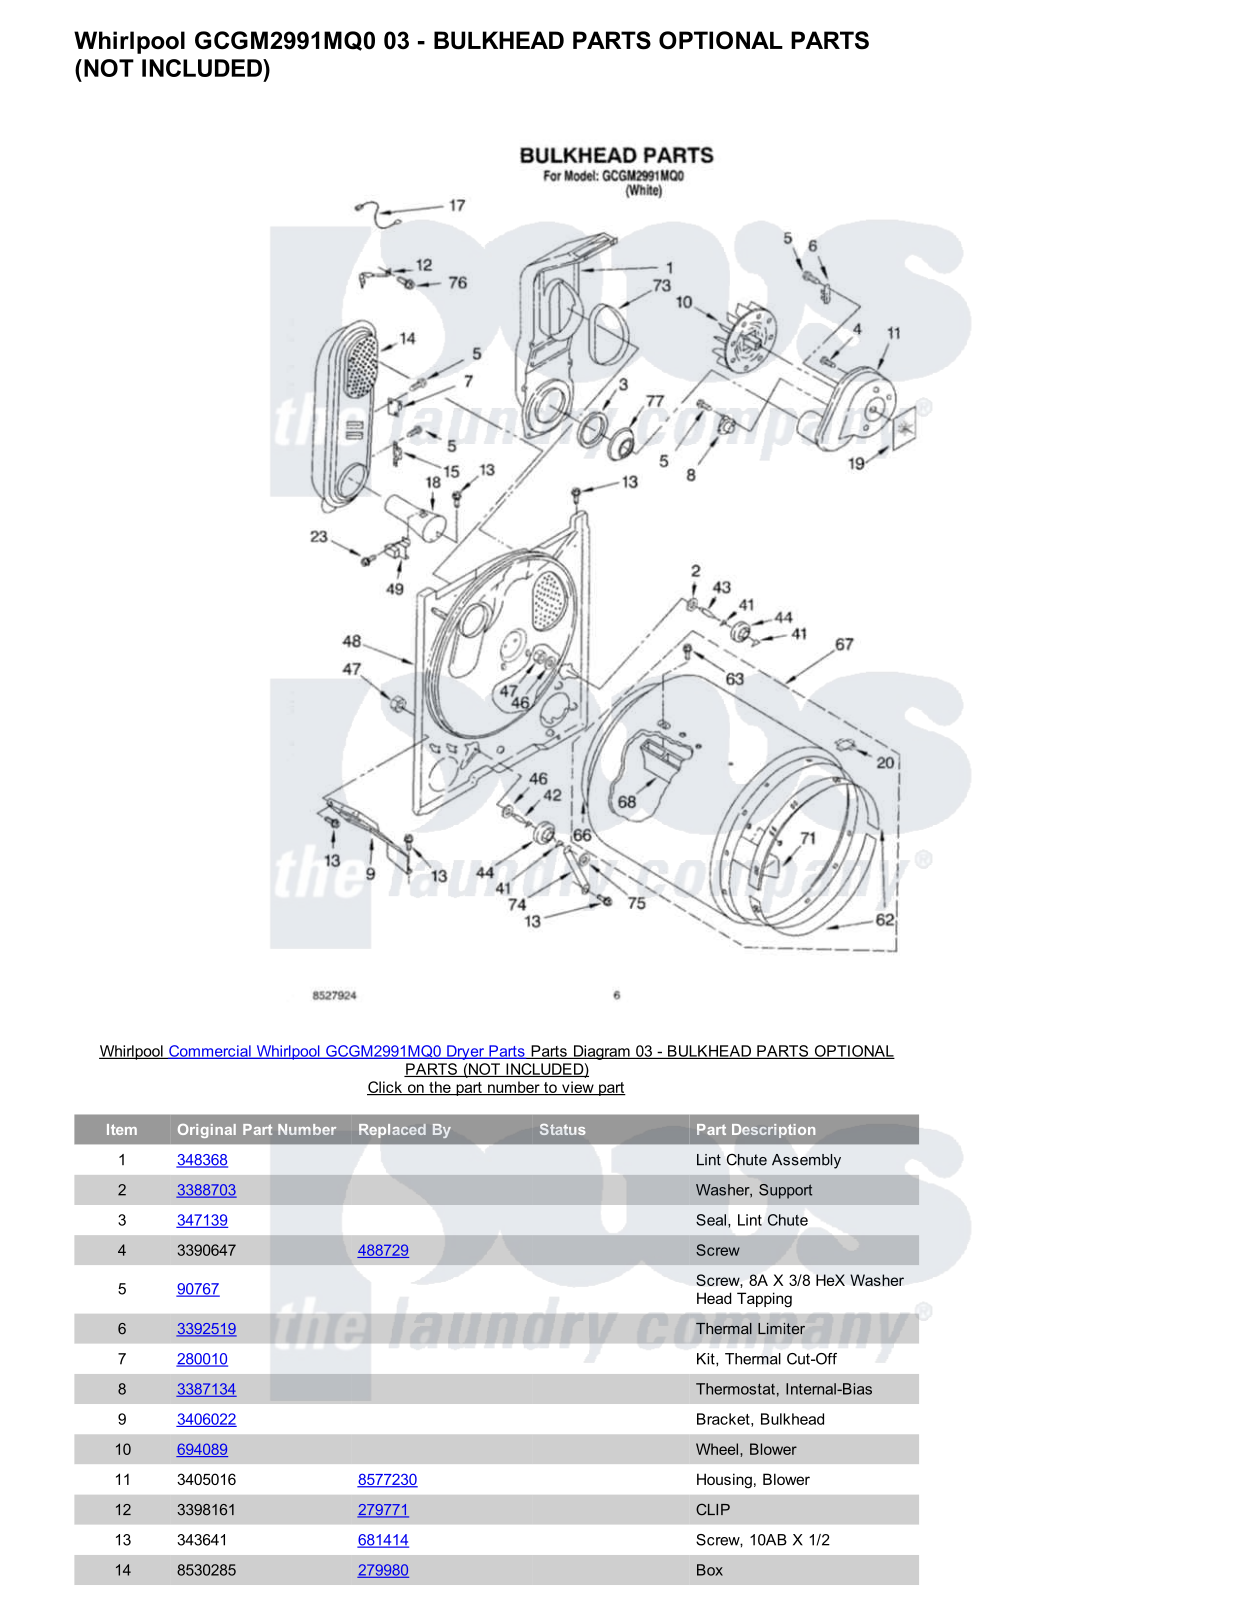 Whirlpool GCGM2991MQ0 Parts Diagram